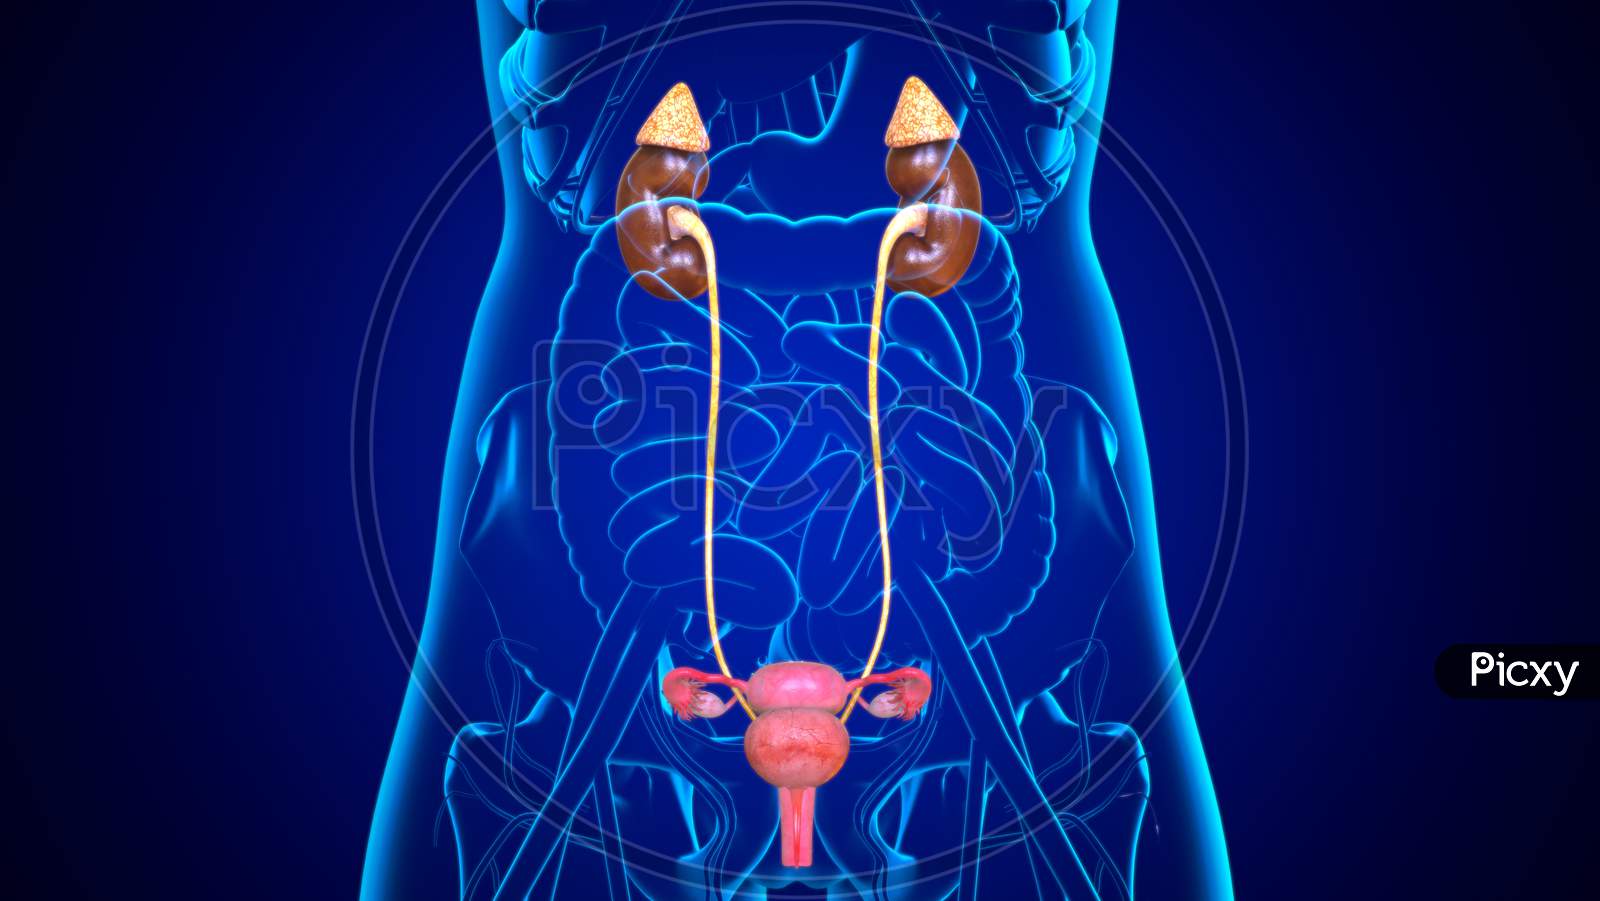 The Uterus: Anatomy and 3D Illustrations